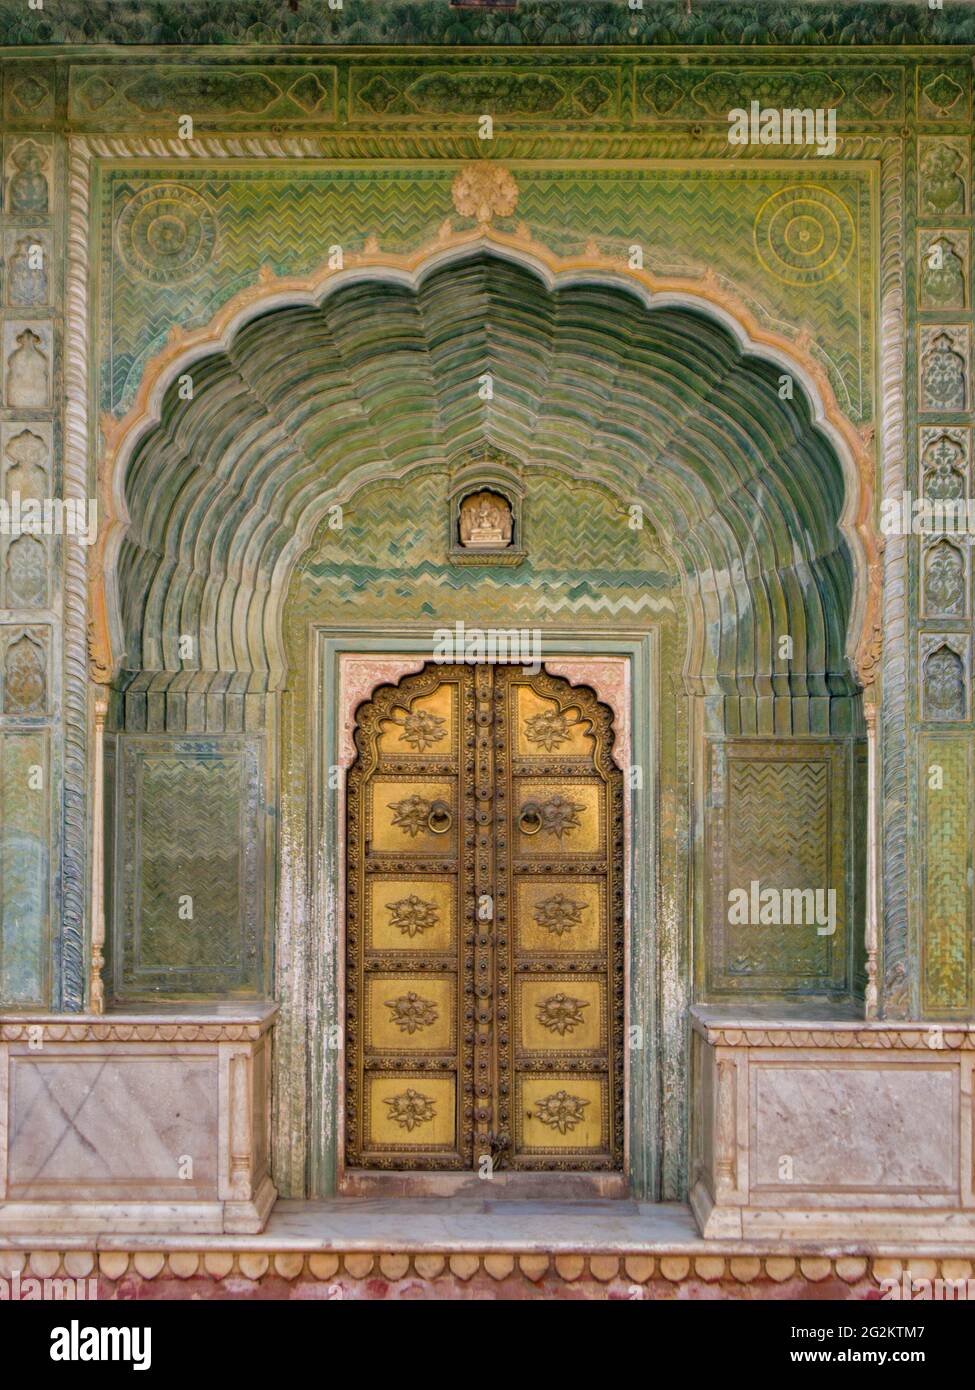 Art porta di lavoro in City Palace Jaipur, Rajasthan, India. Foto Stock